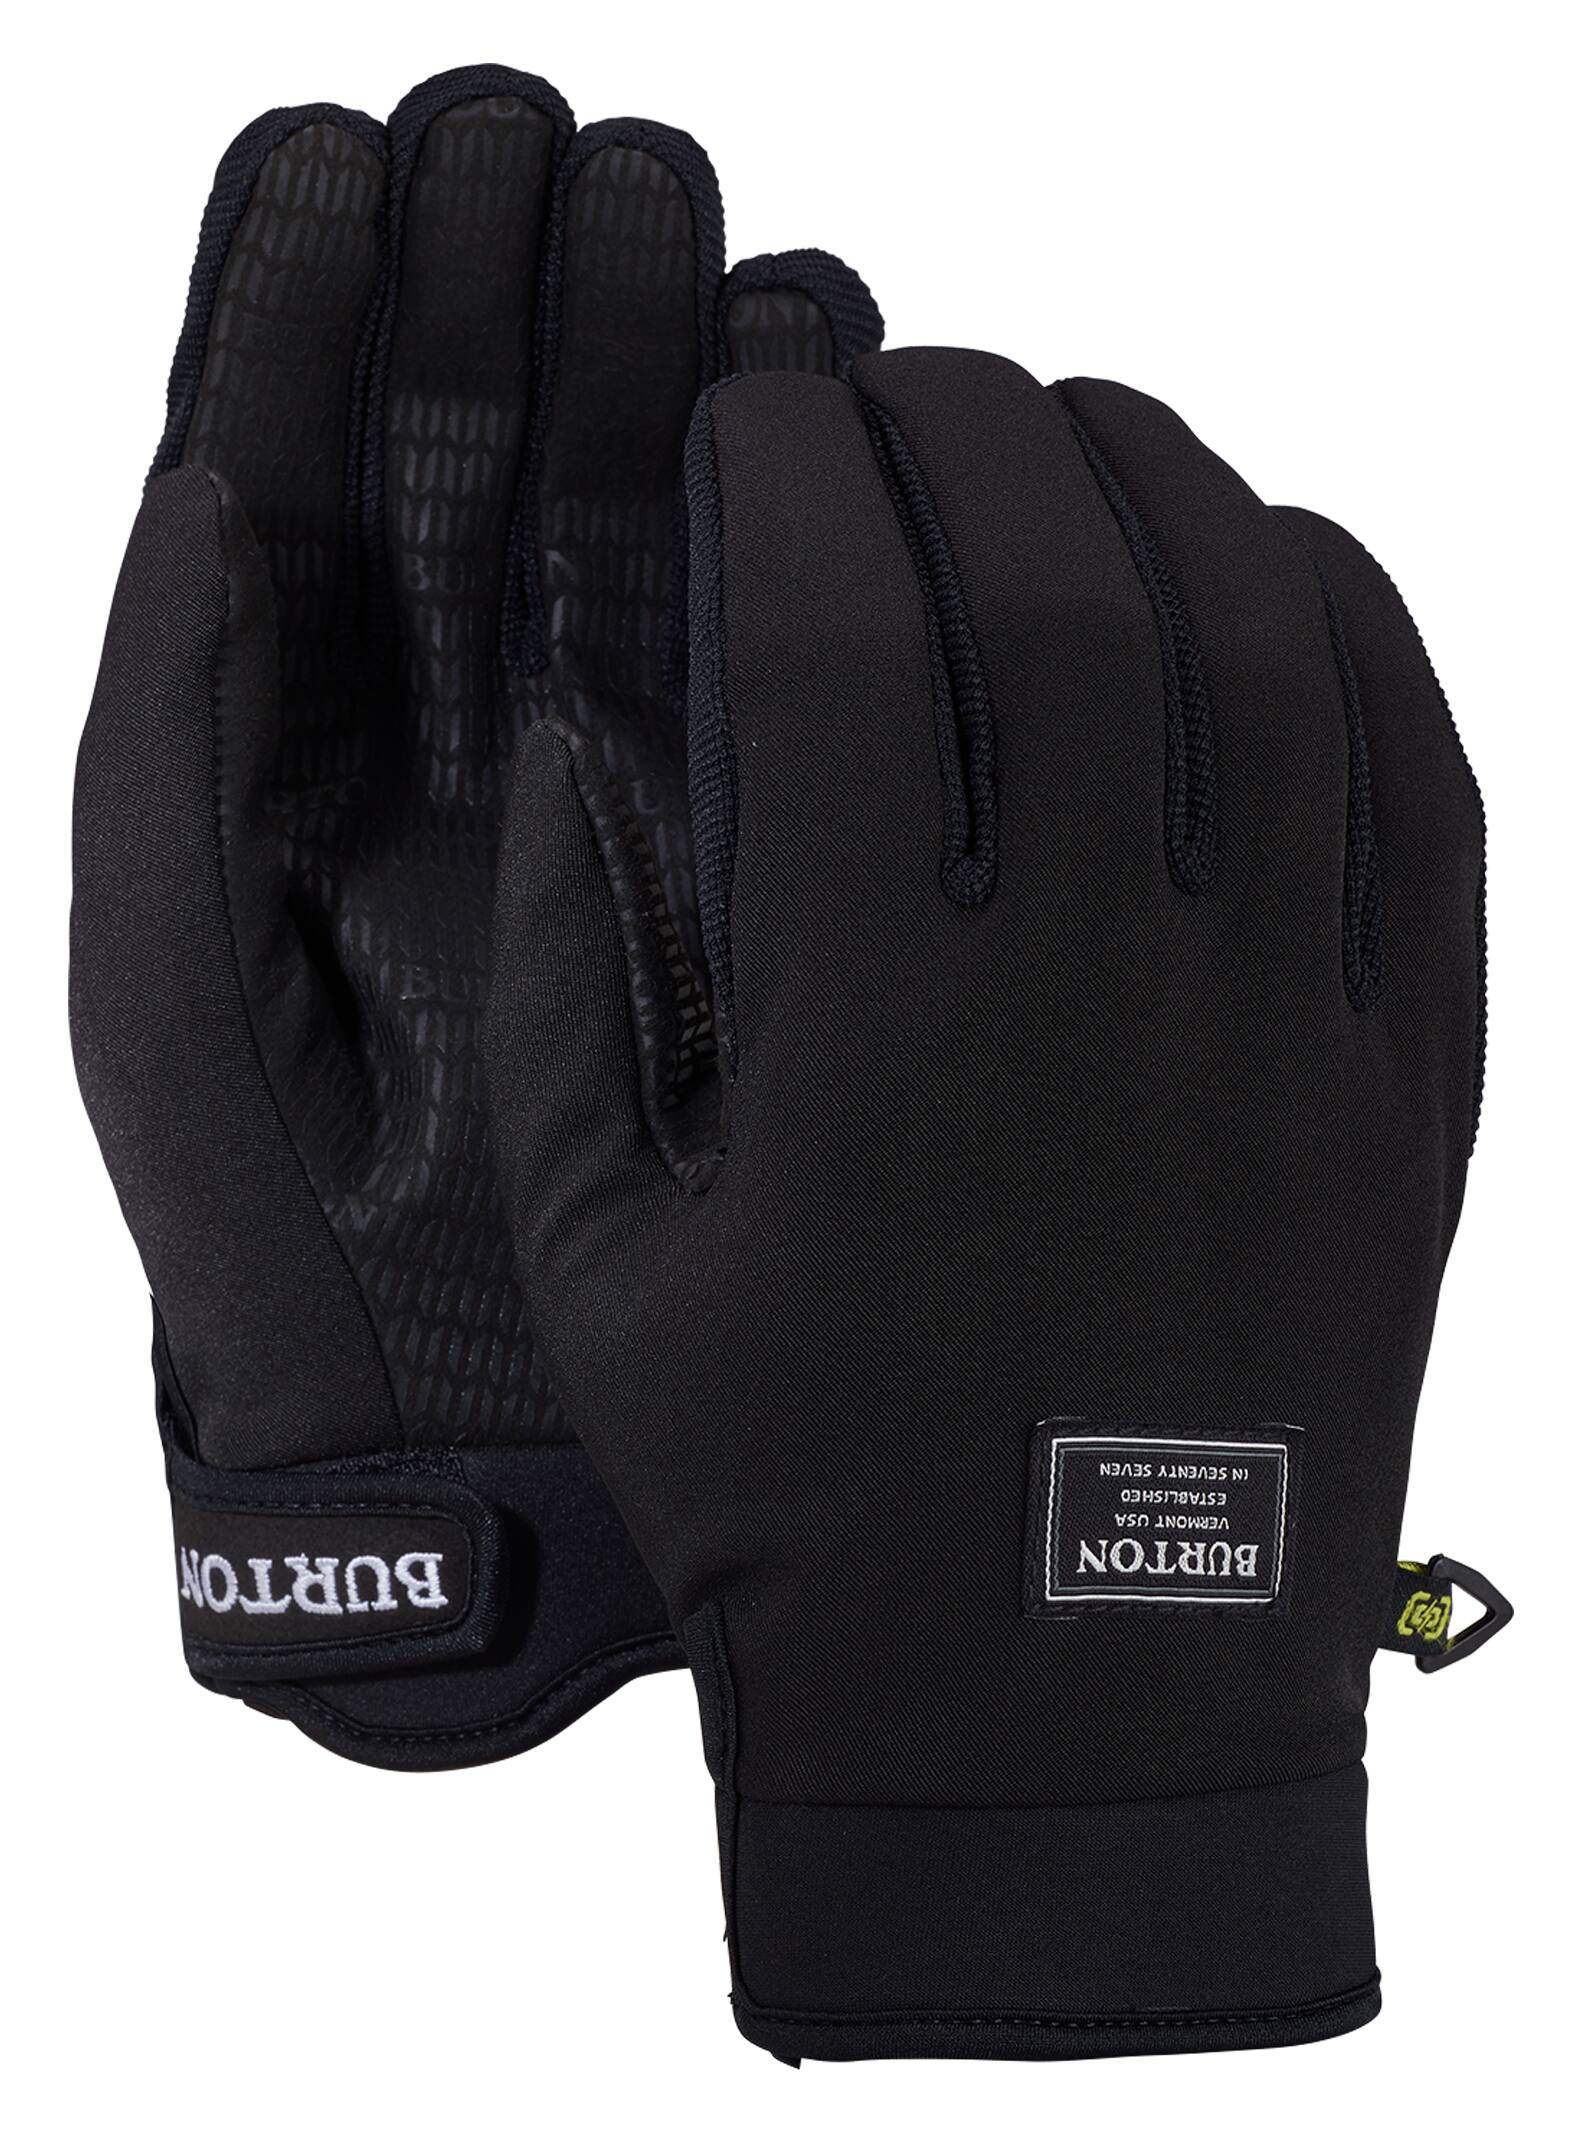 Men's Burton Spectre Glove | Burton.com Winter 2019 US